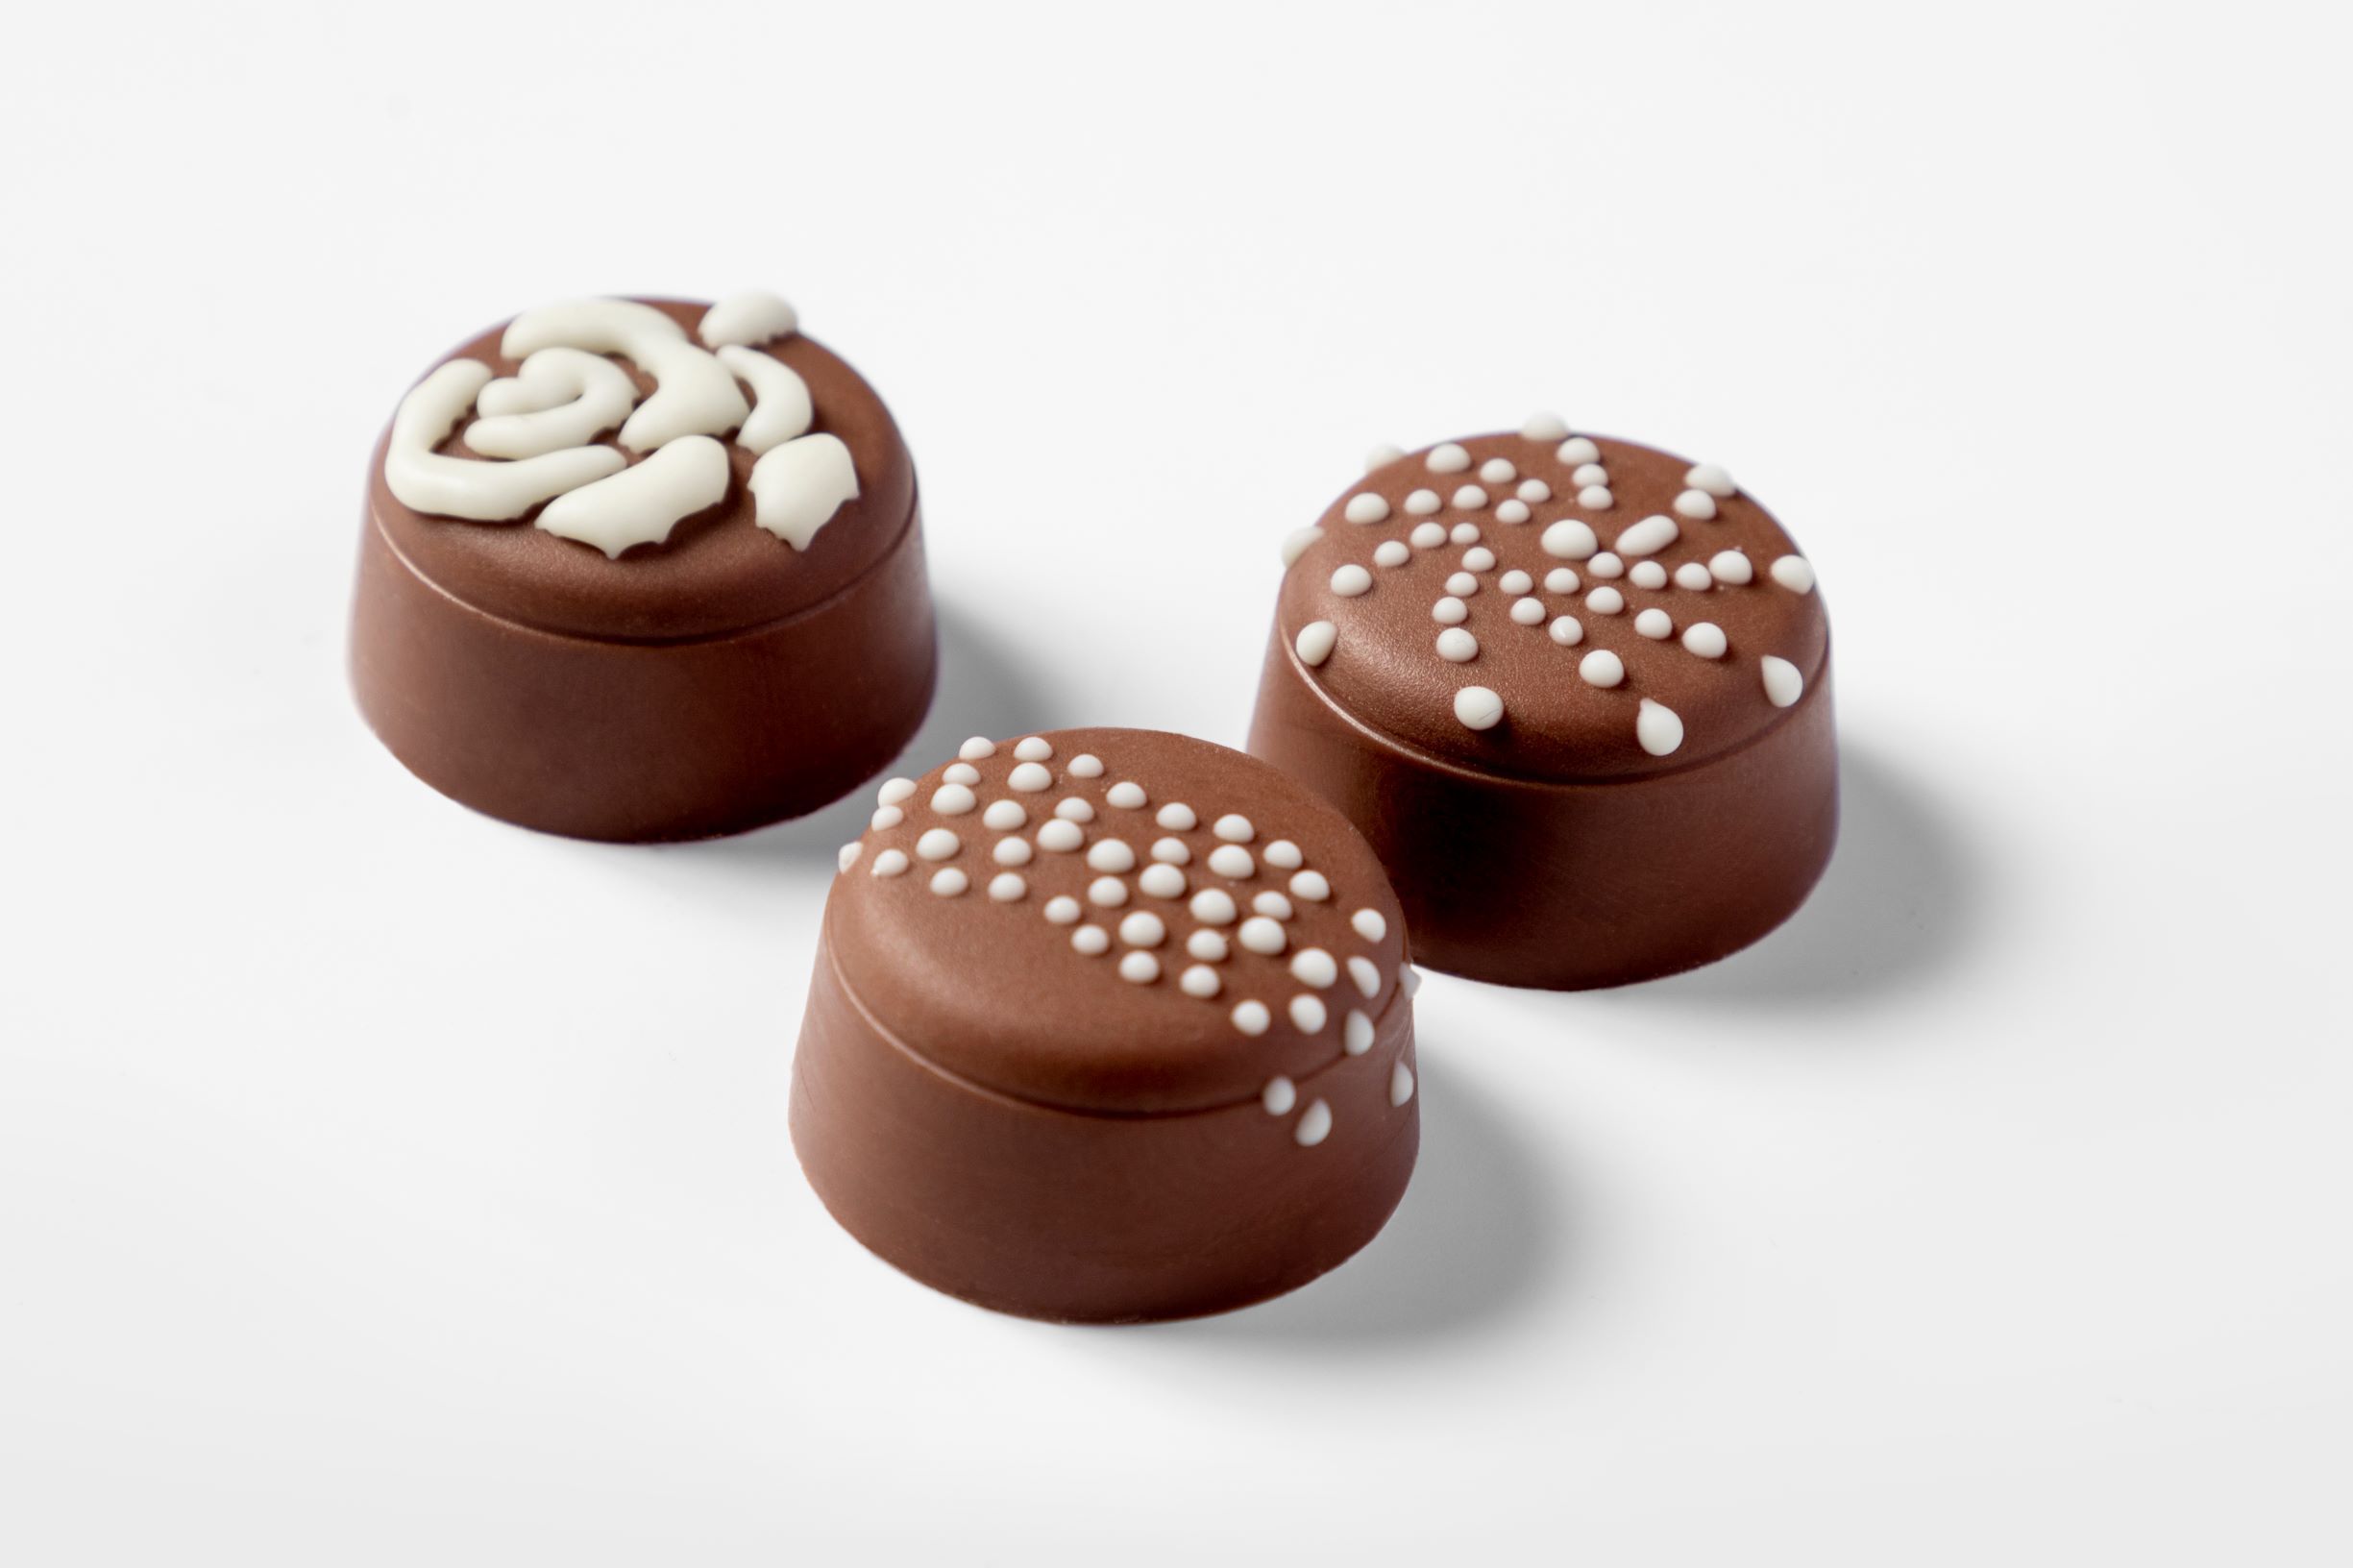 Three milk chocolate pralines decorated with white chocolate by FoodJet chocolate depositor